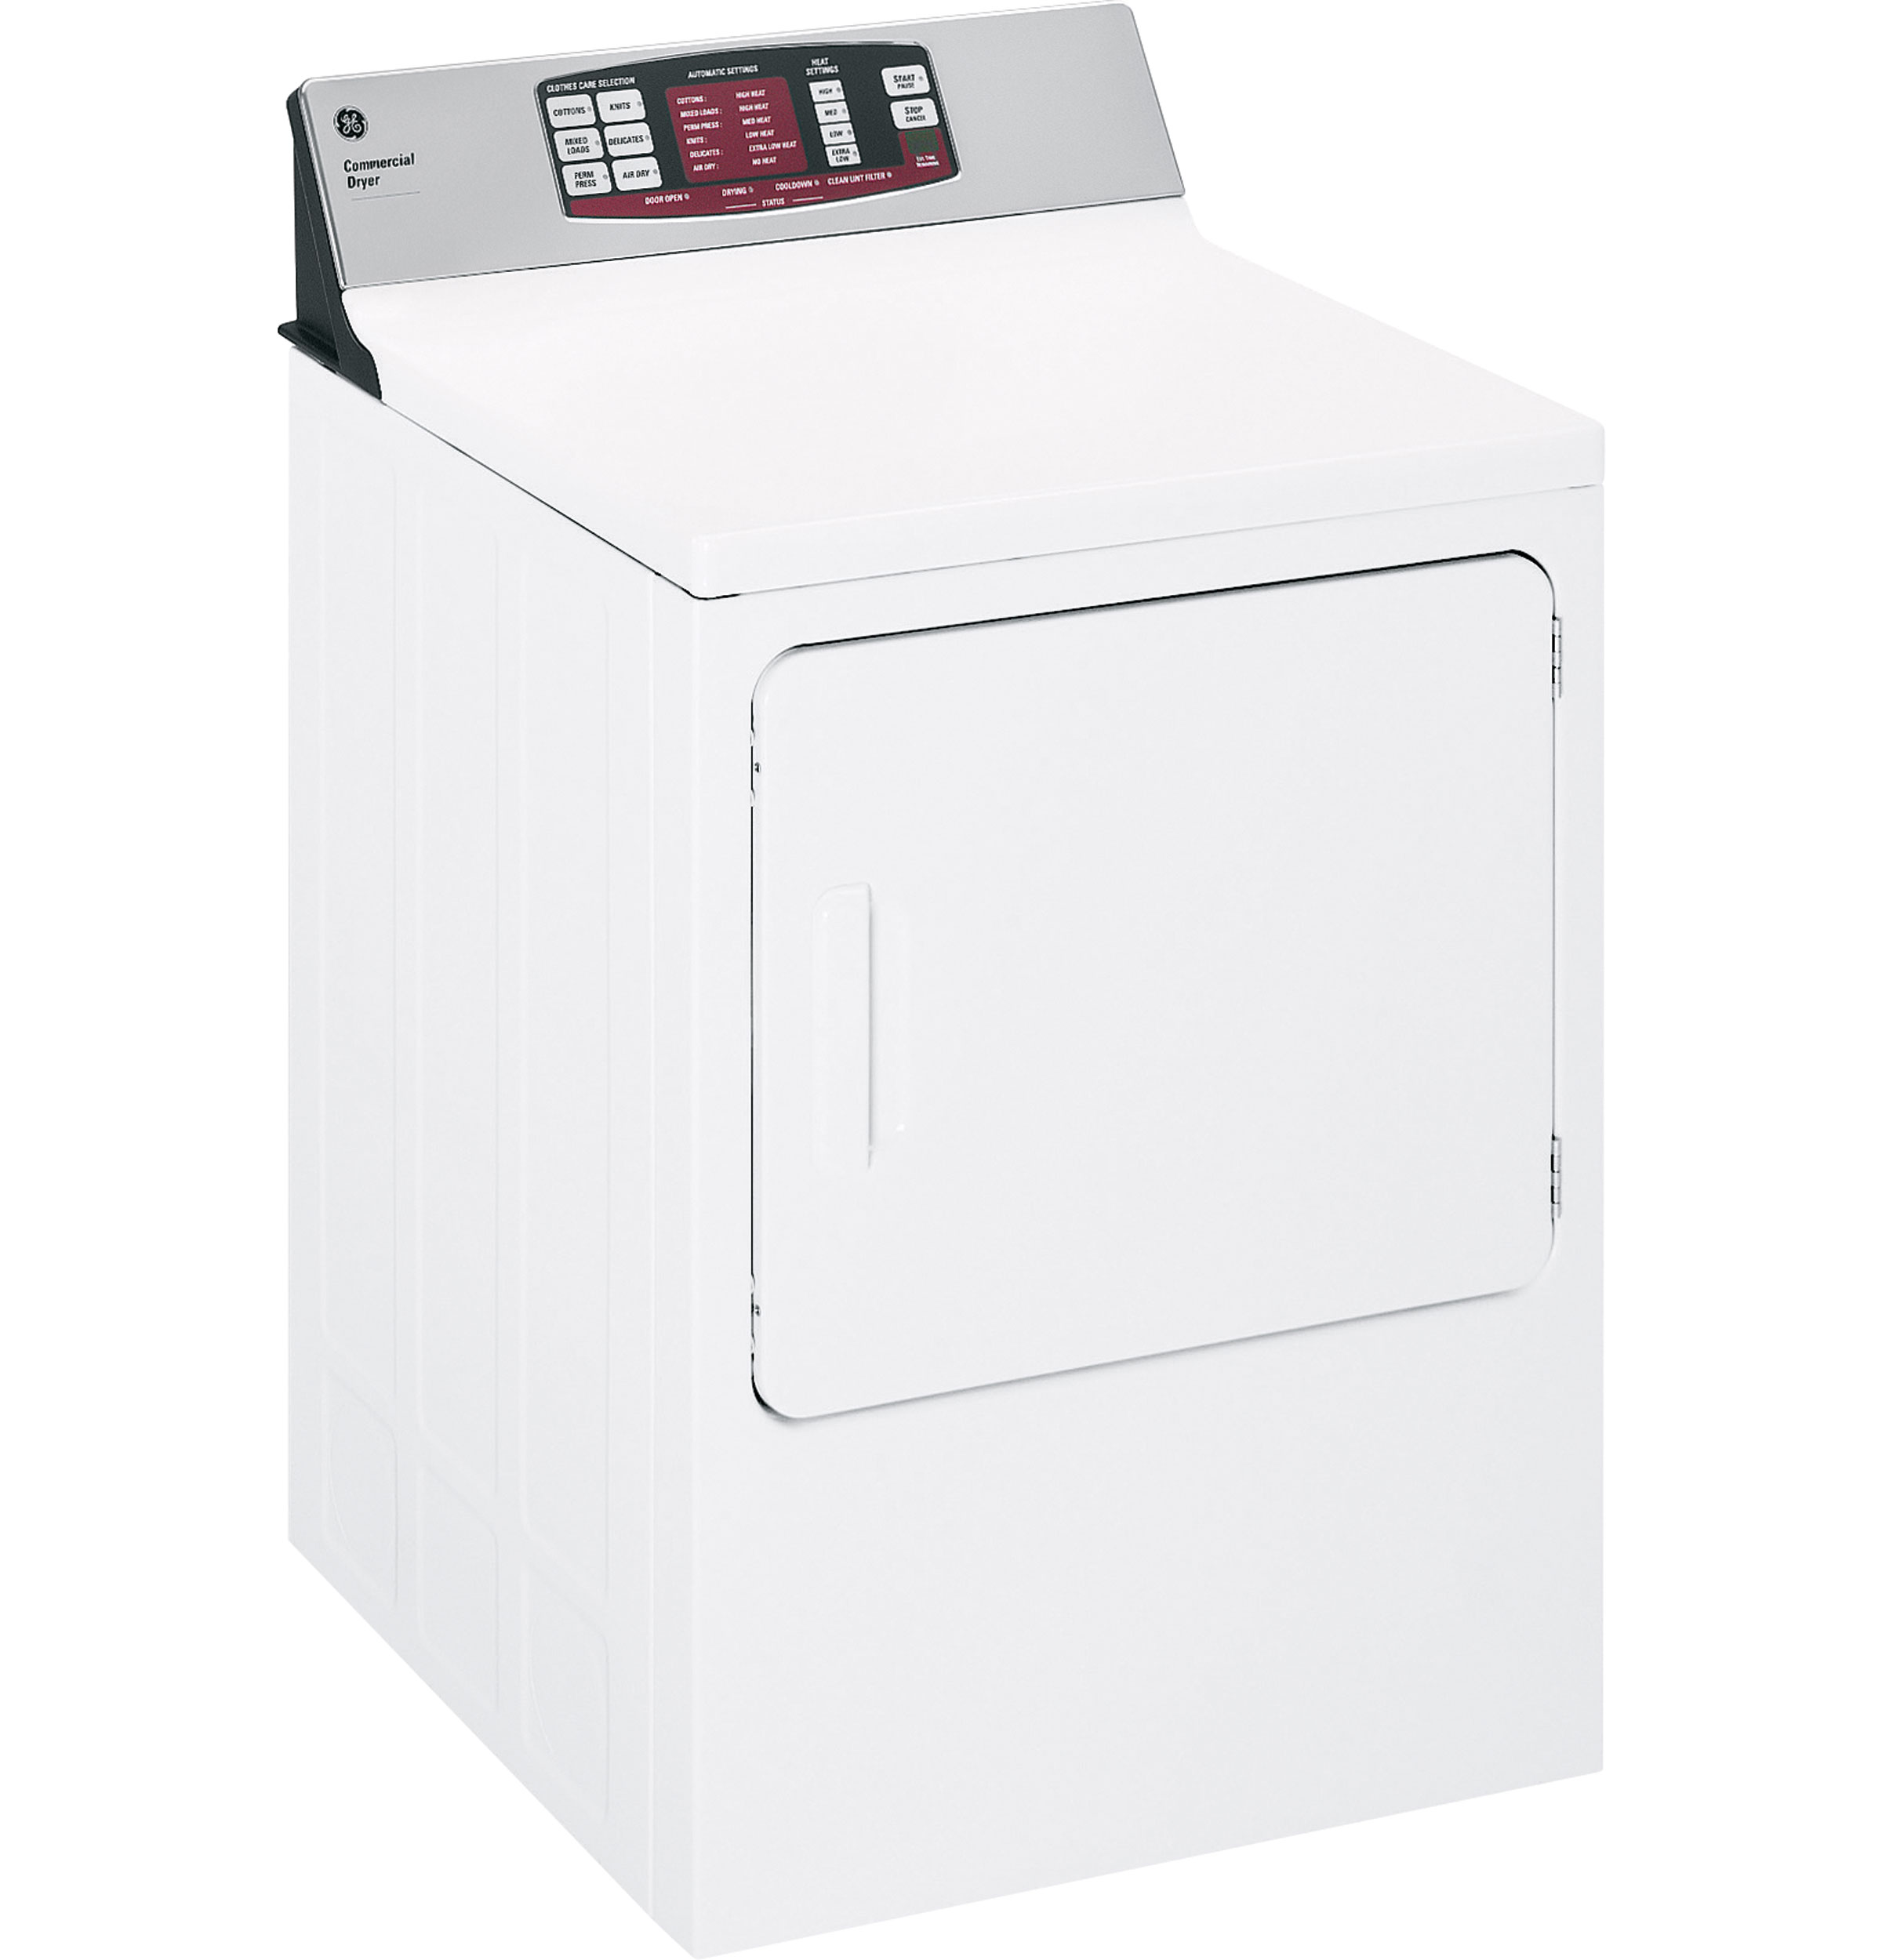 GE® 7.0 Cu. Ft. Super Capacity Gas Commercial Dryer